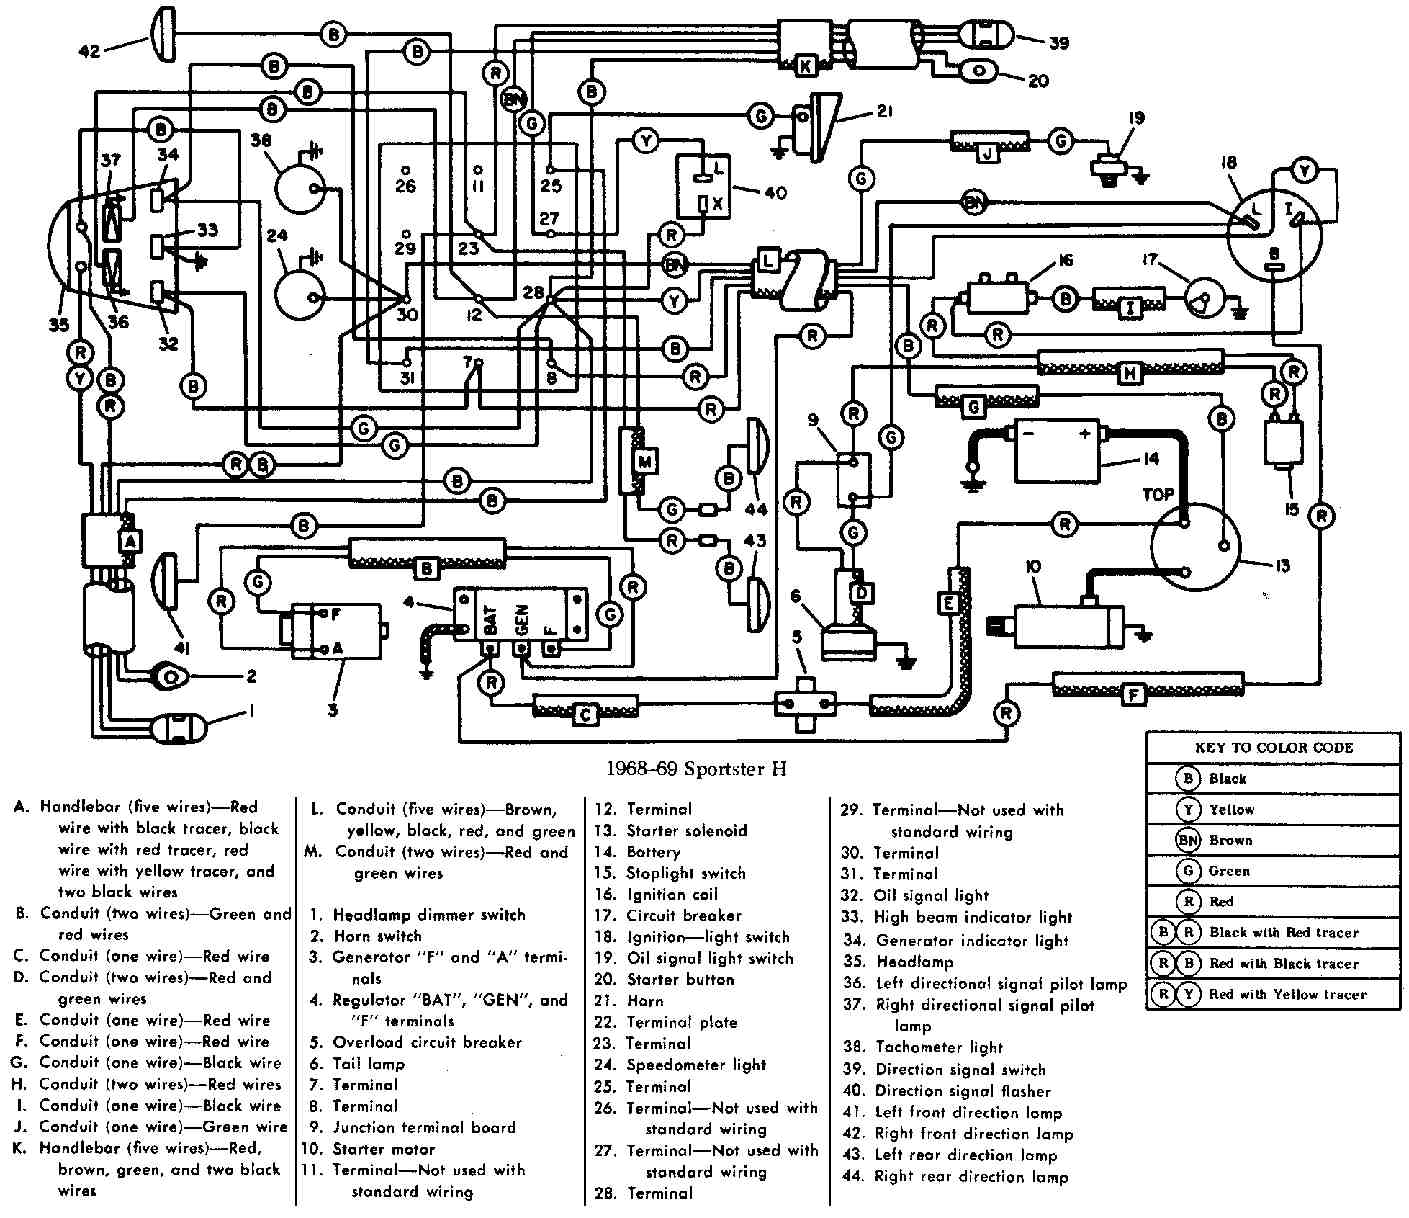 2002 Chrysler voyager fuse box diagram #3